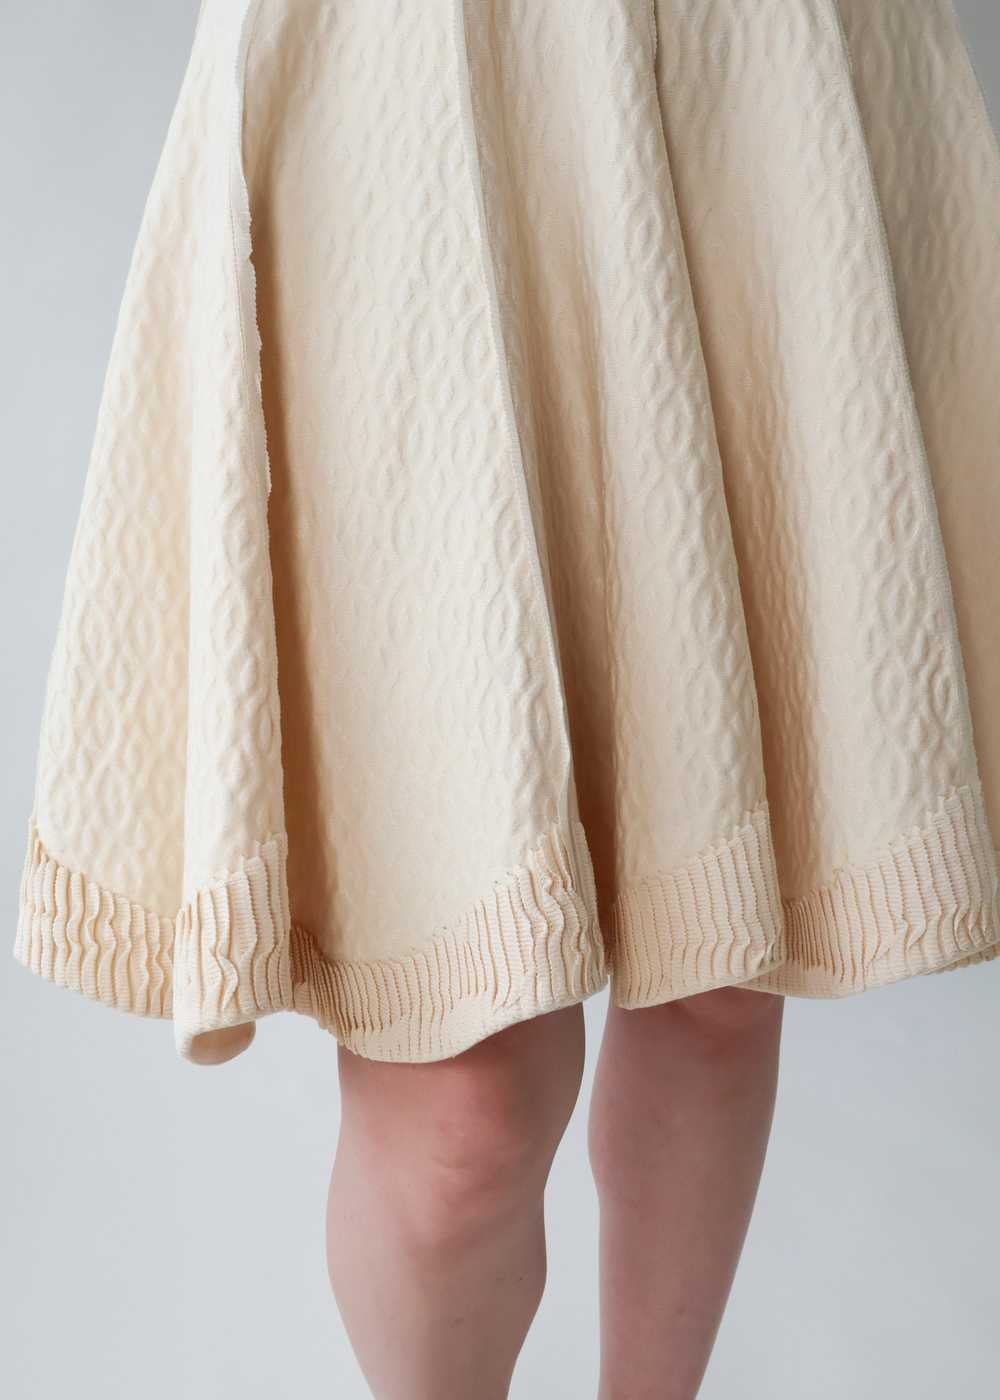 Alaia Textured Knit Dress - image 7